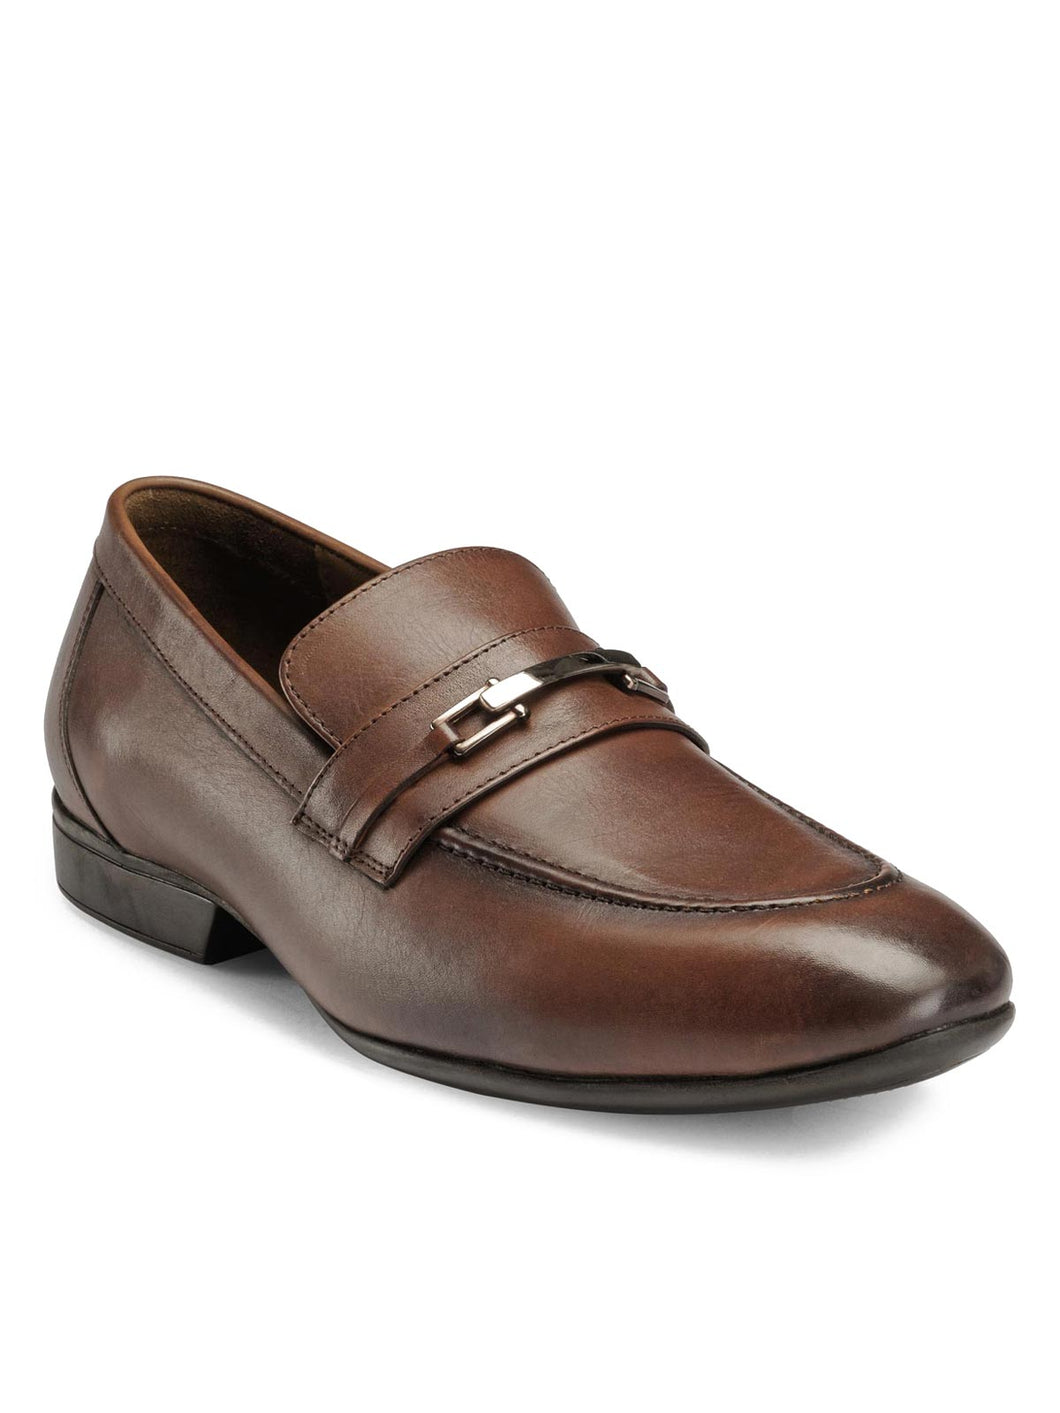 Teakwood Genuine Leather slip-ons shoes